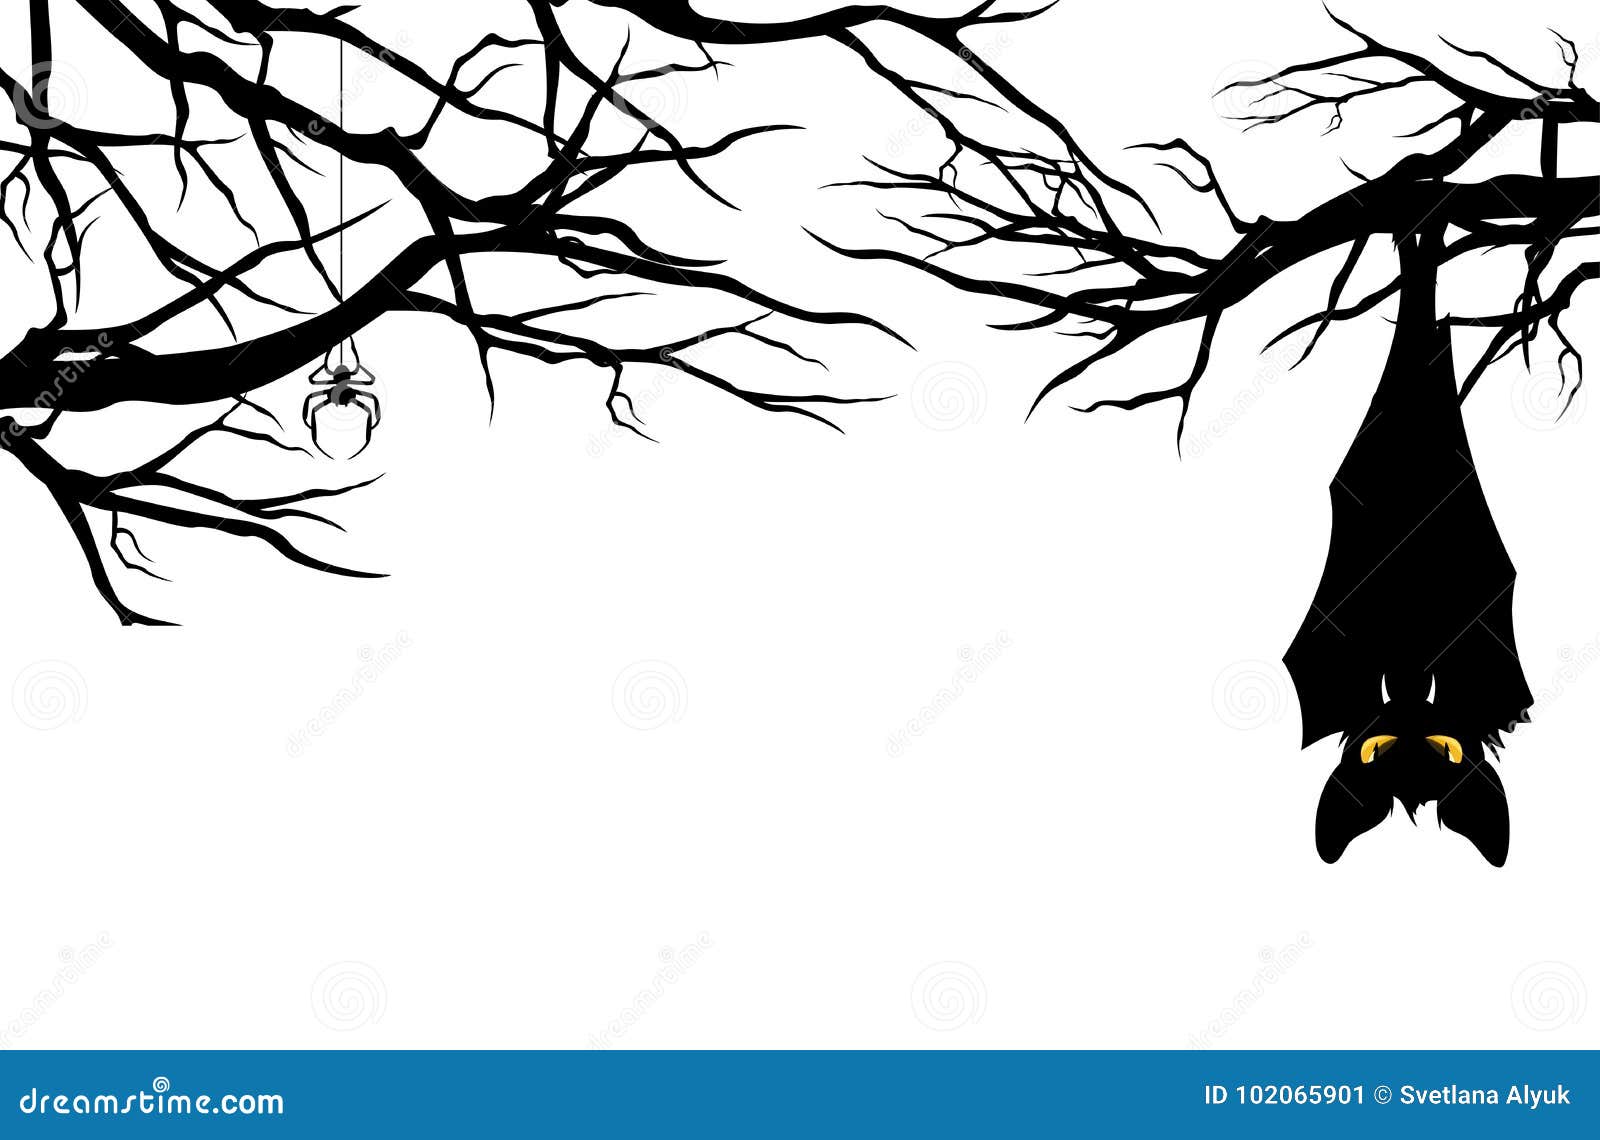 halloween bat hanging among tree branches 